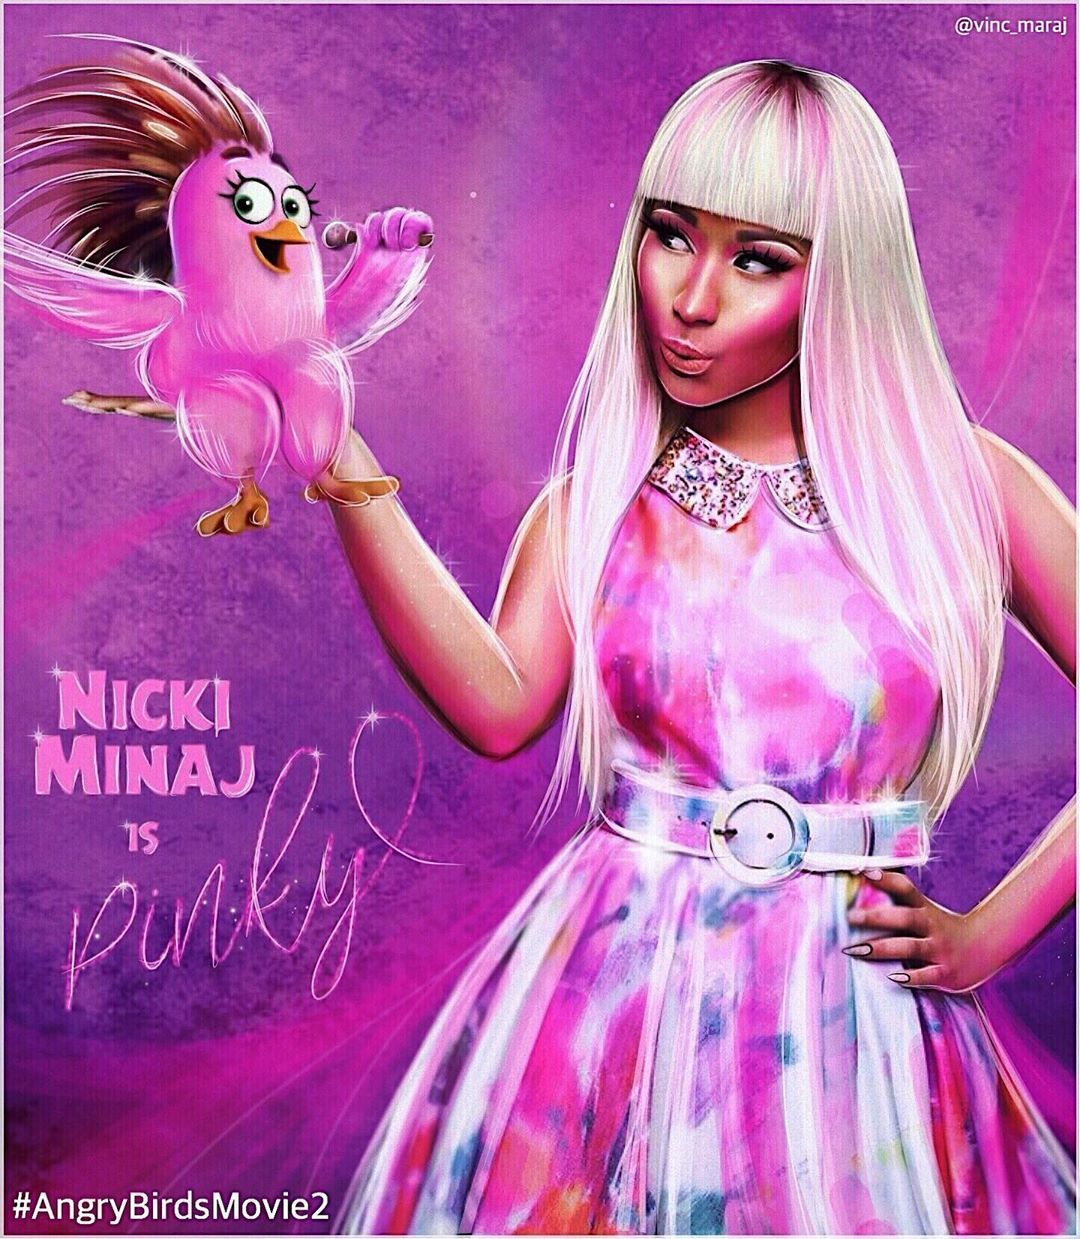 Pinky And Nikki Minaj bodies images